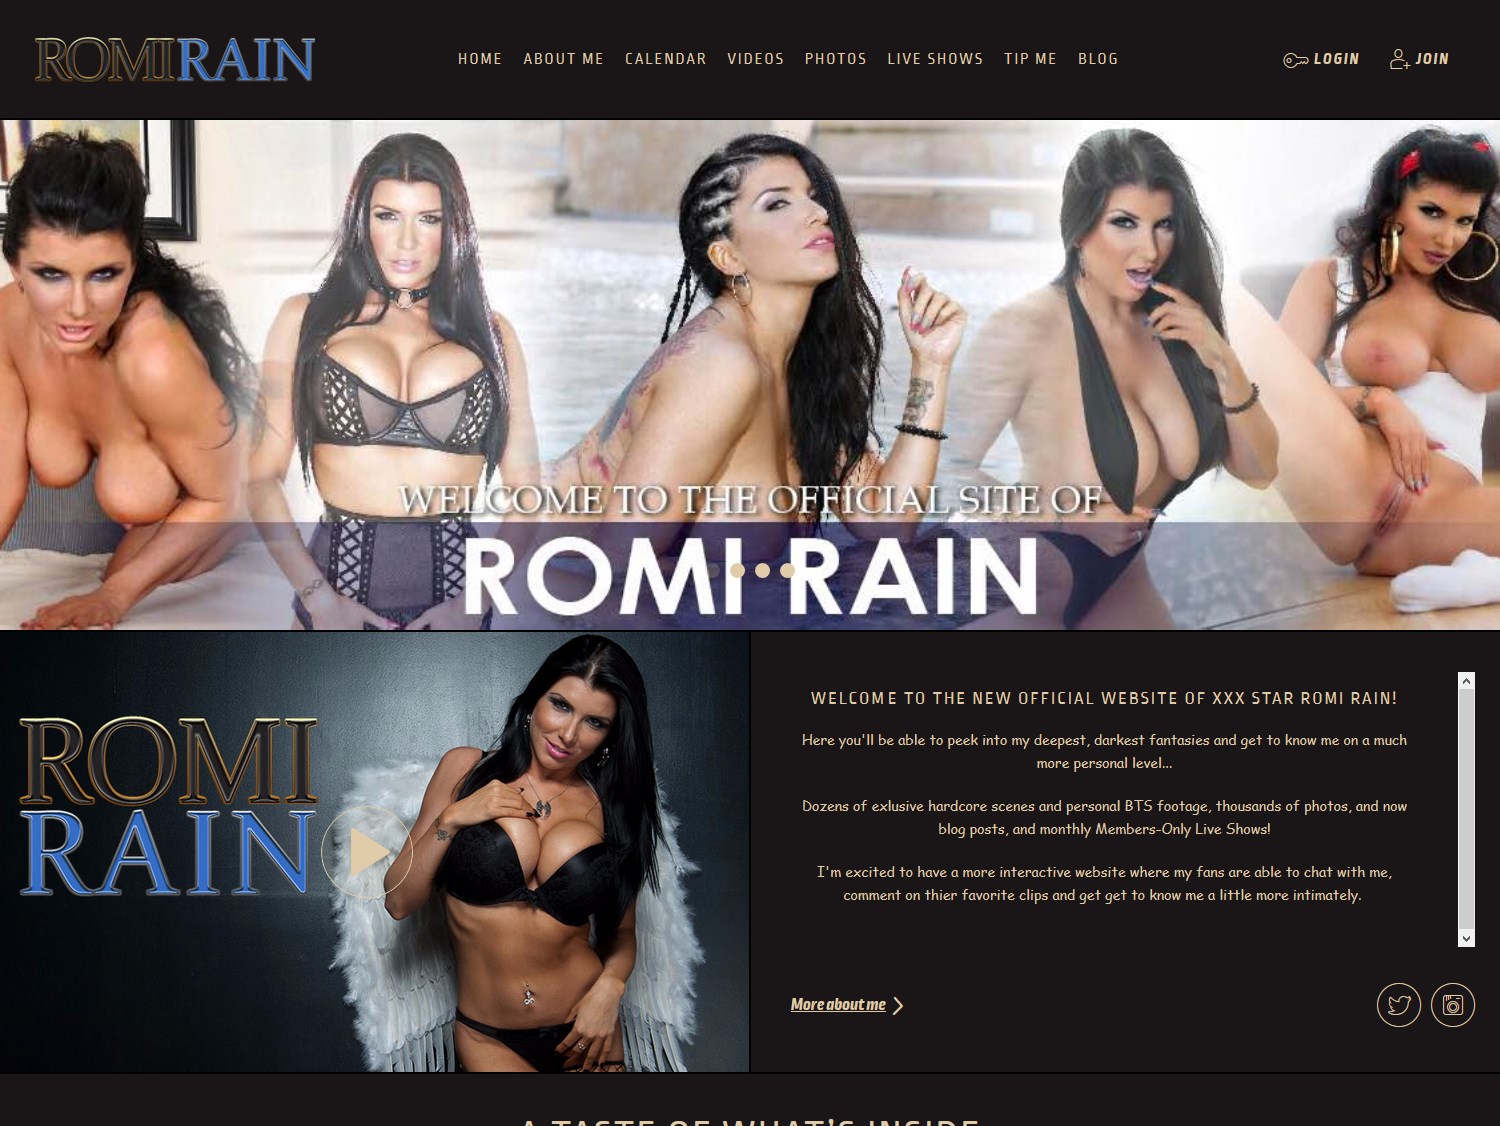 Romi rain website